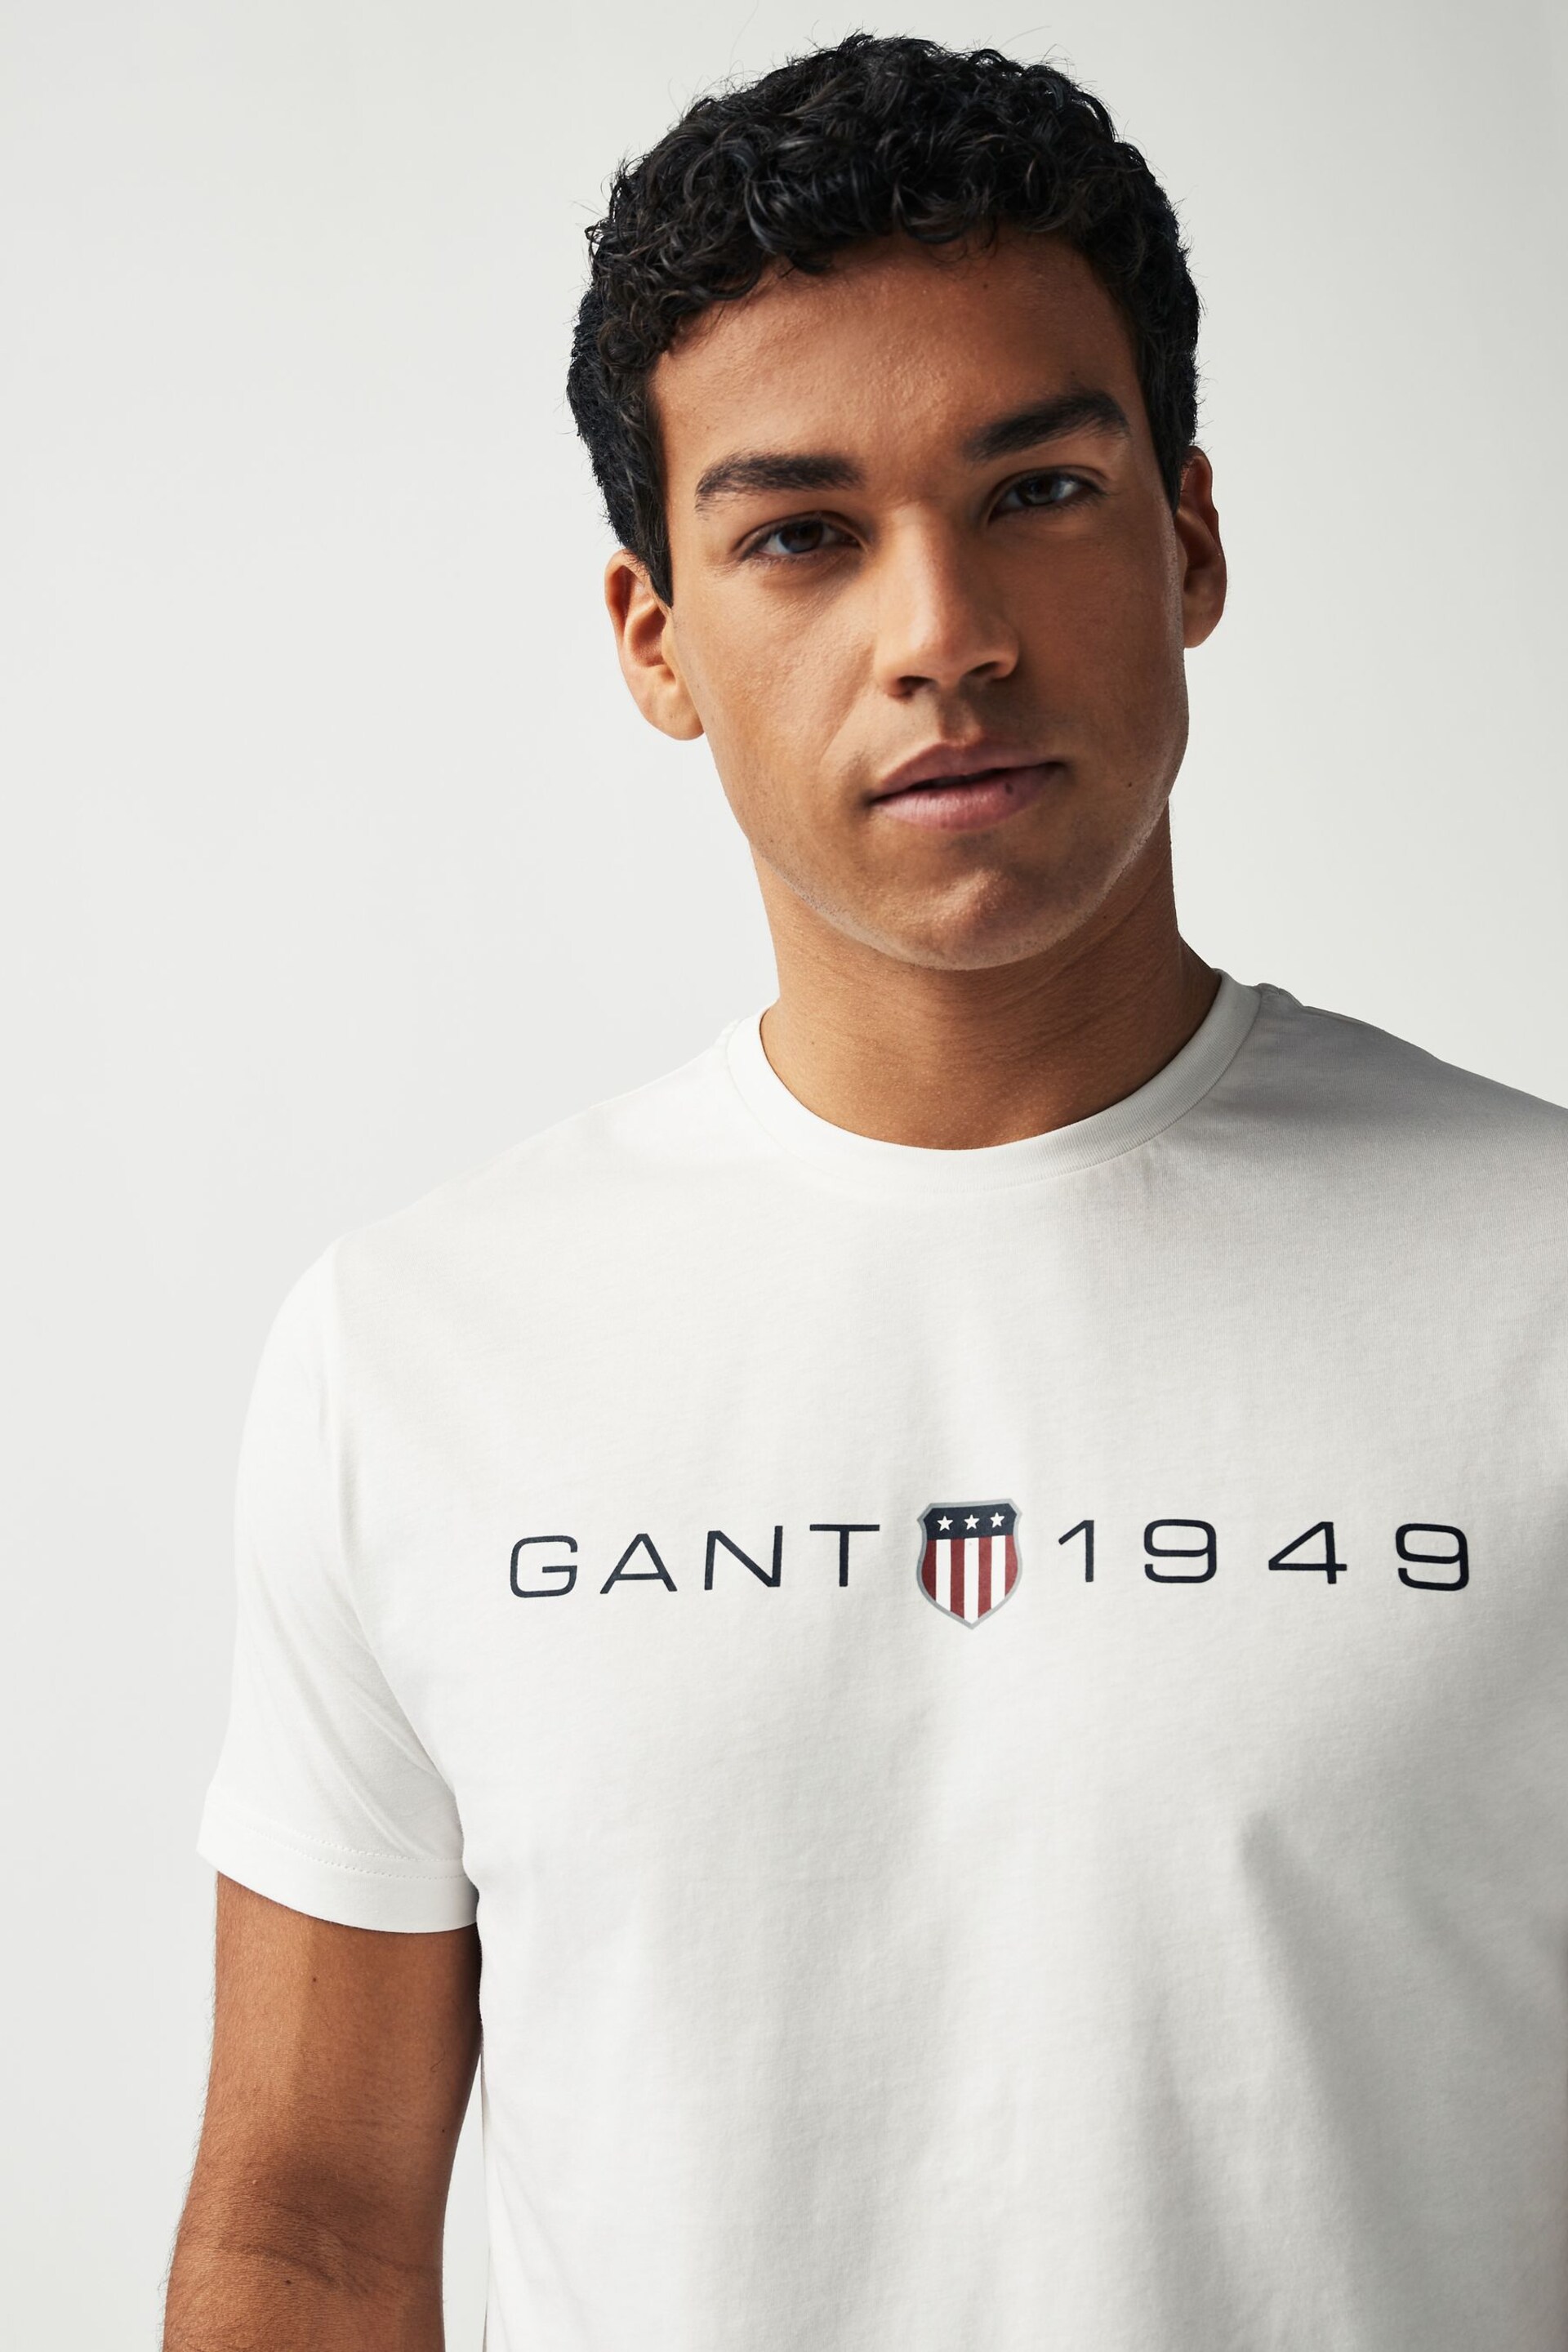 GANT Printed Graphic T-Shirt - Image 3 of 4